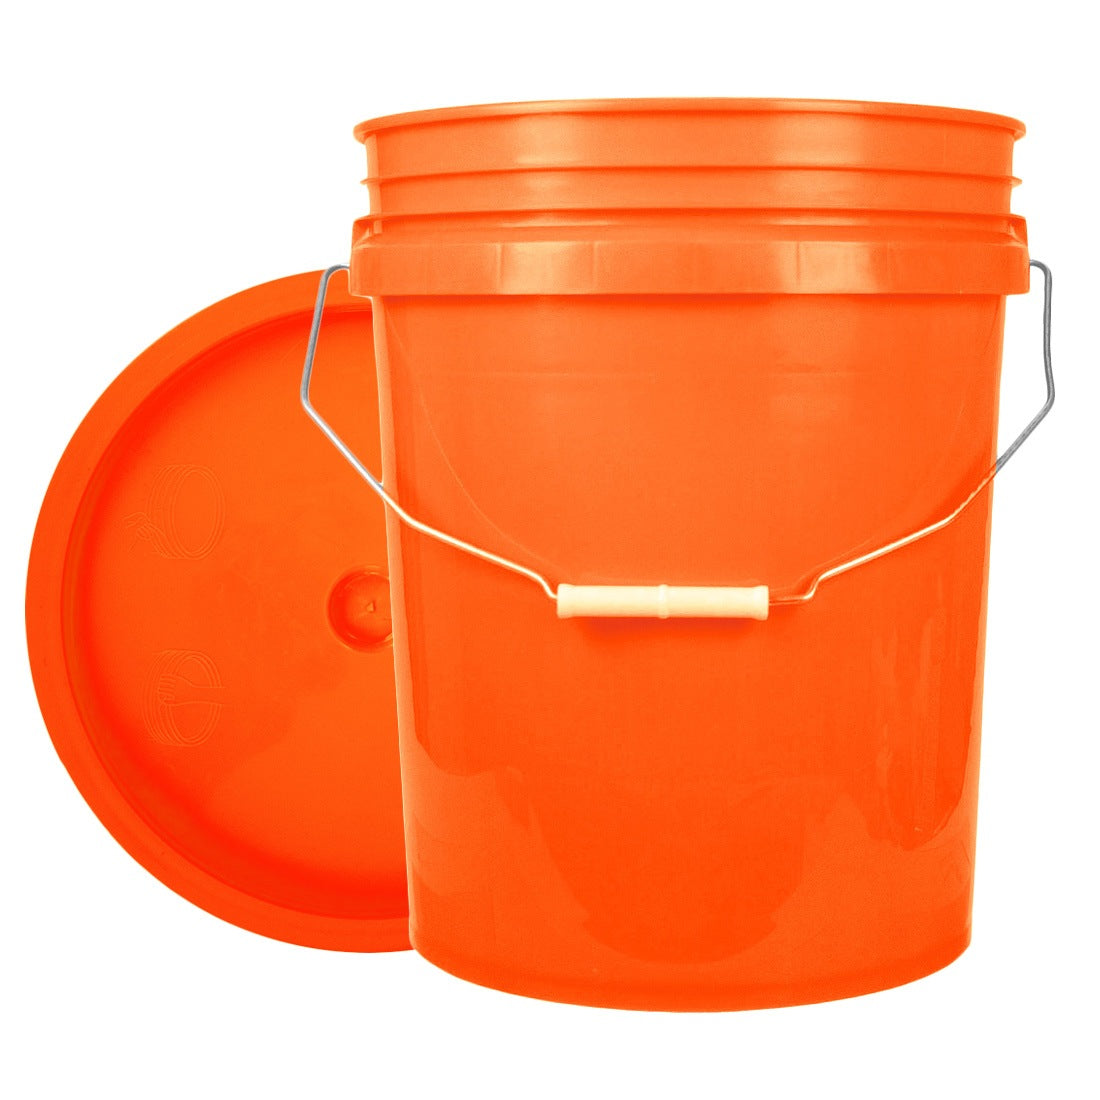 XERO Round Bucket Orange Front View